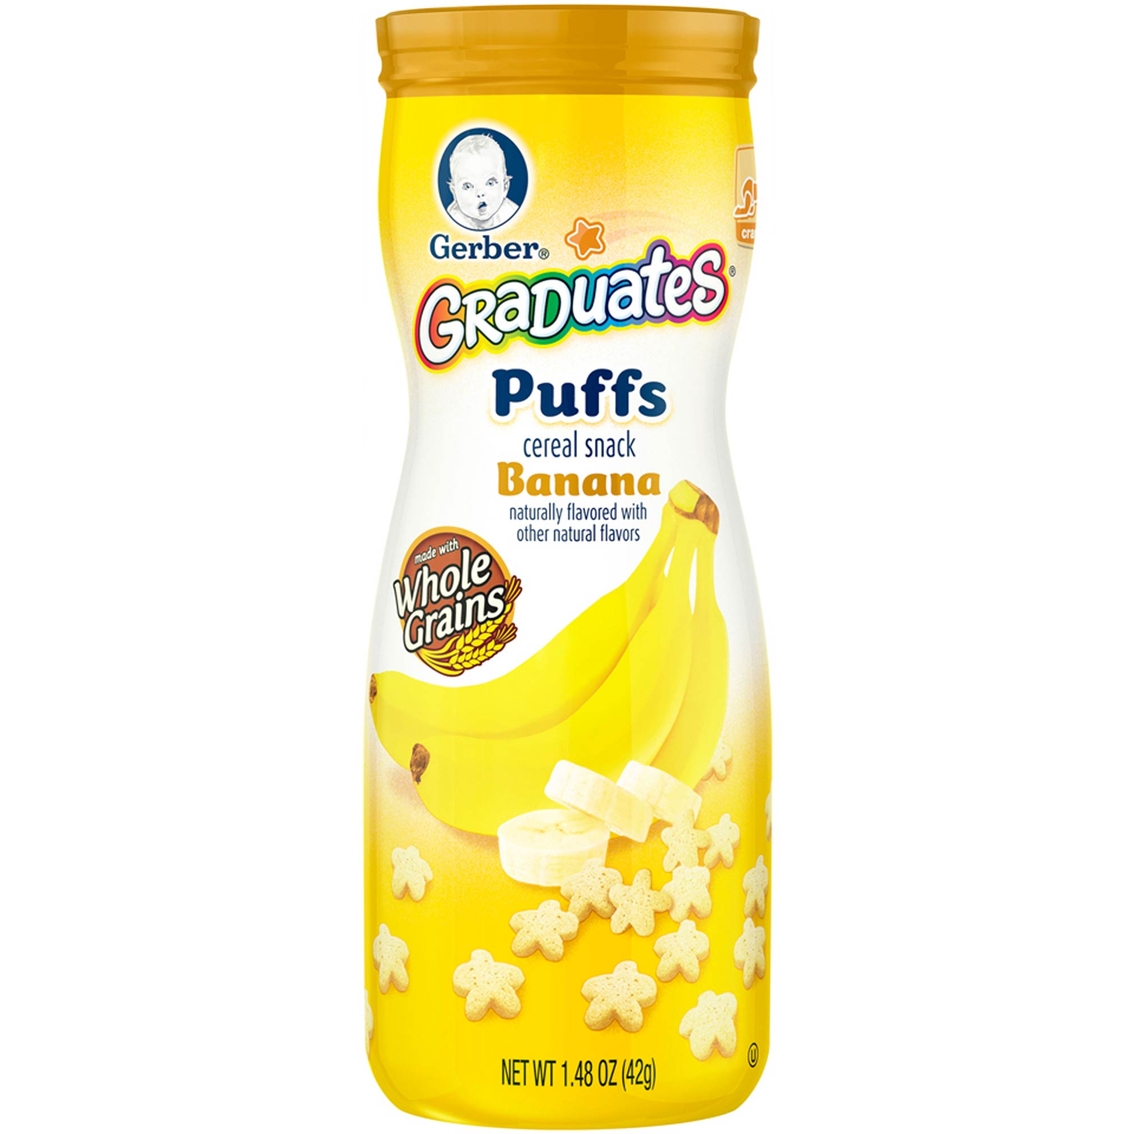 Gerber Graduates Puffs Banana 1.48 Oz. Cereal Snack | Baby Food